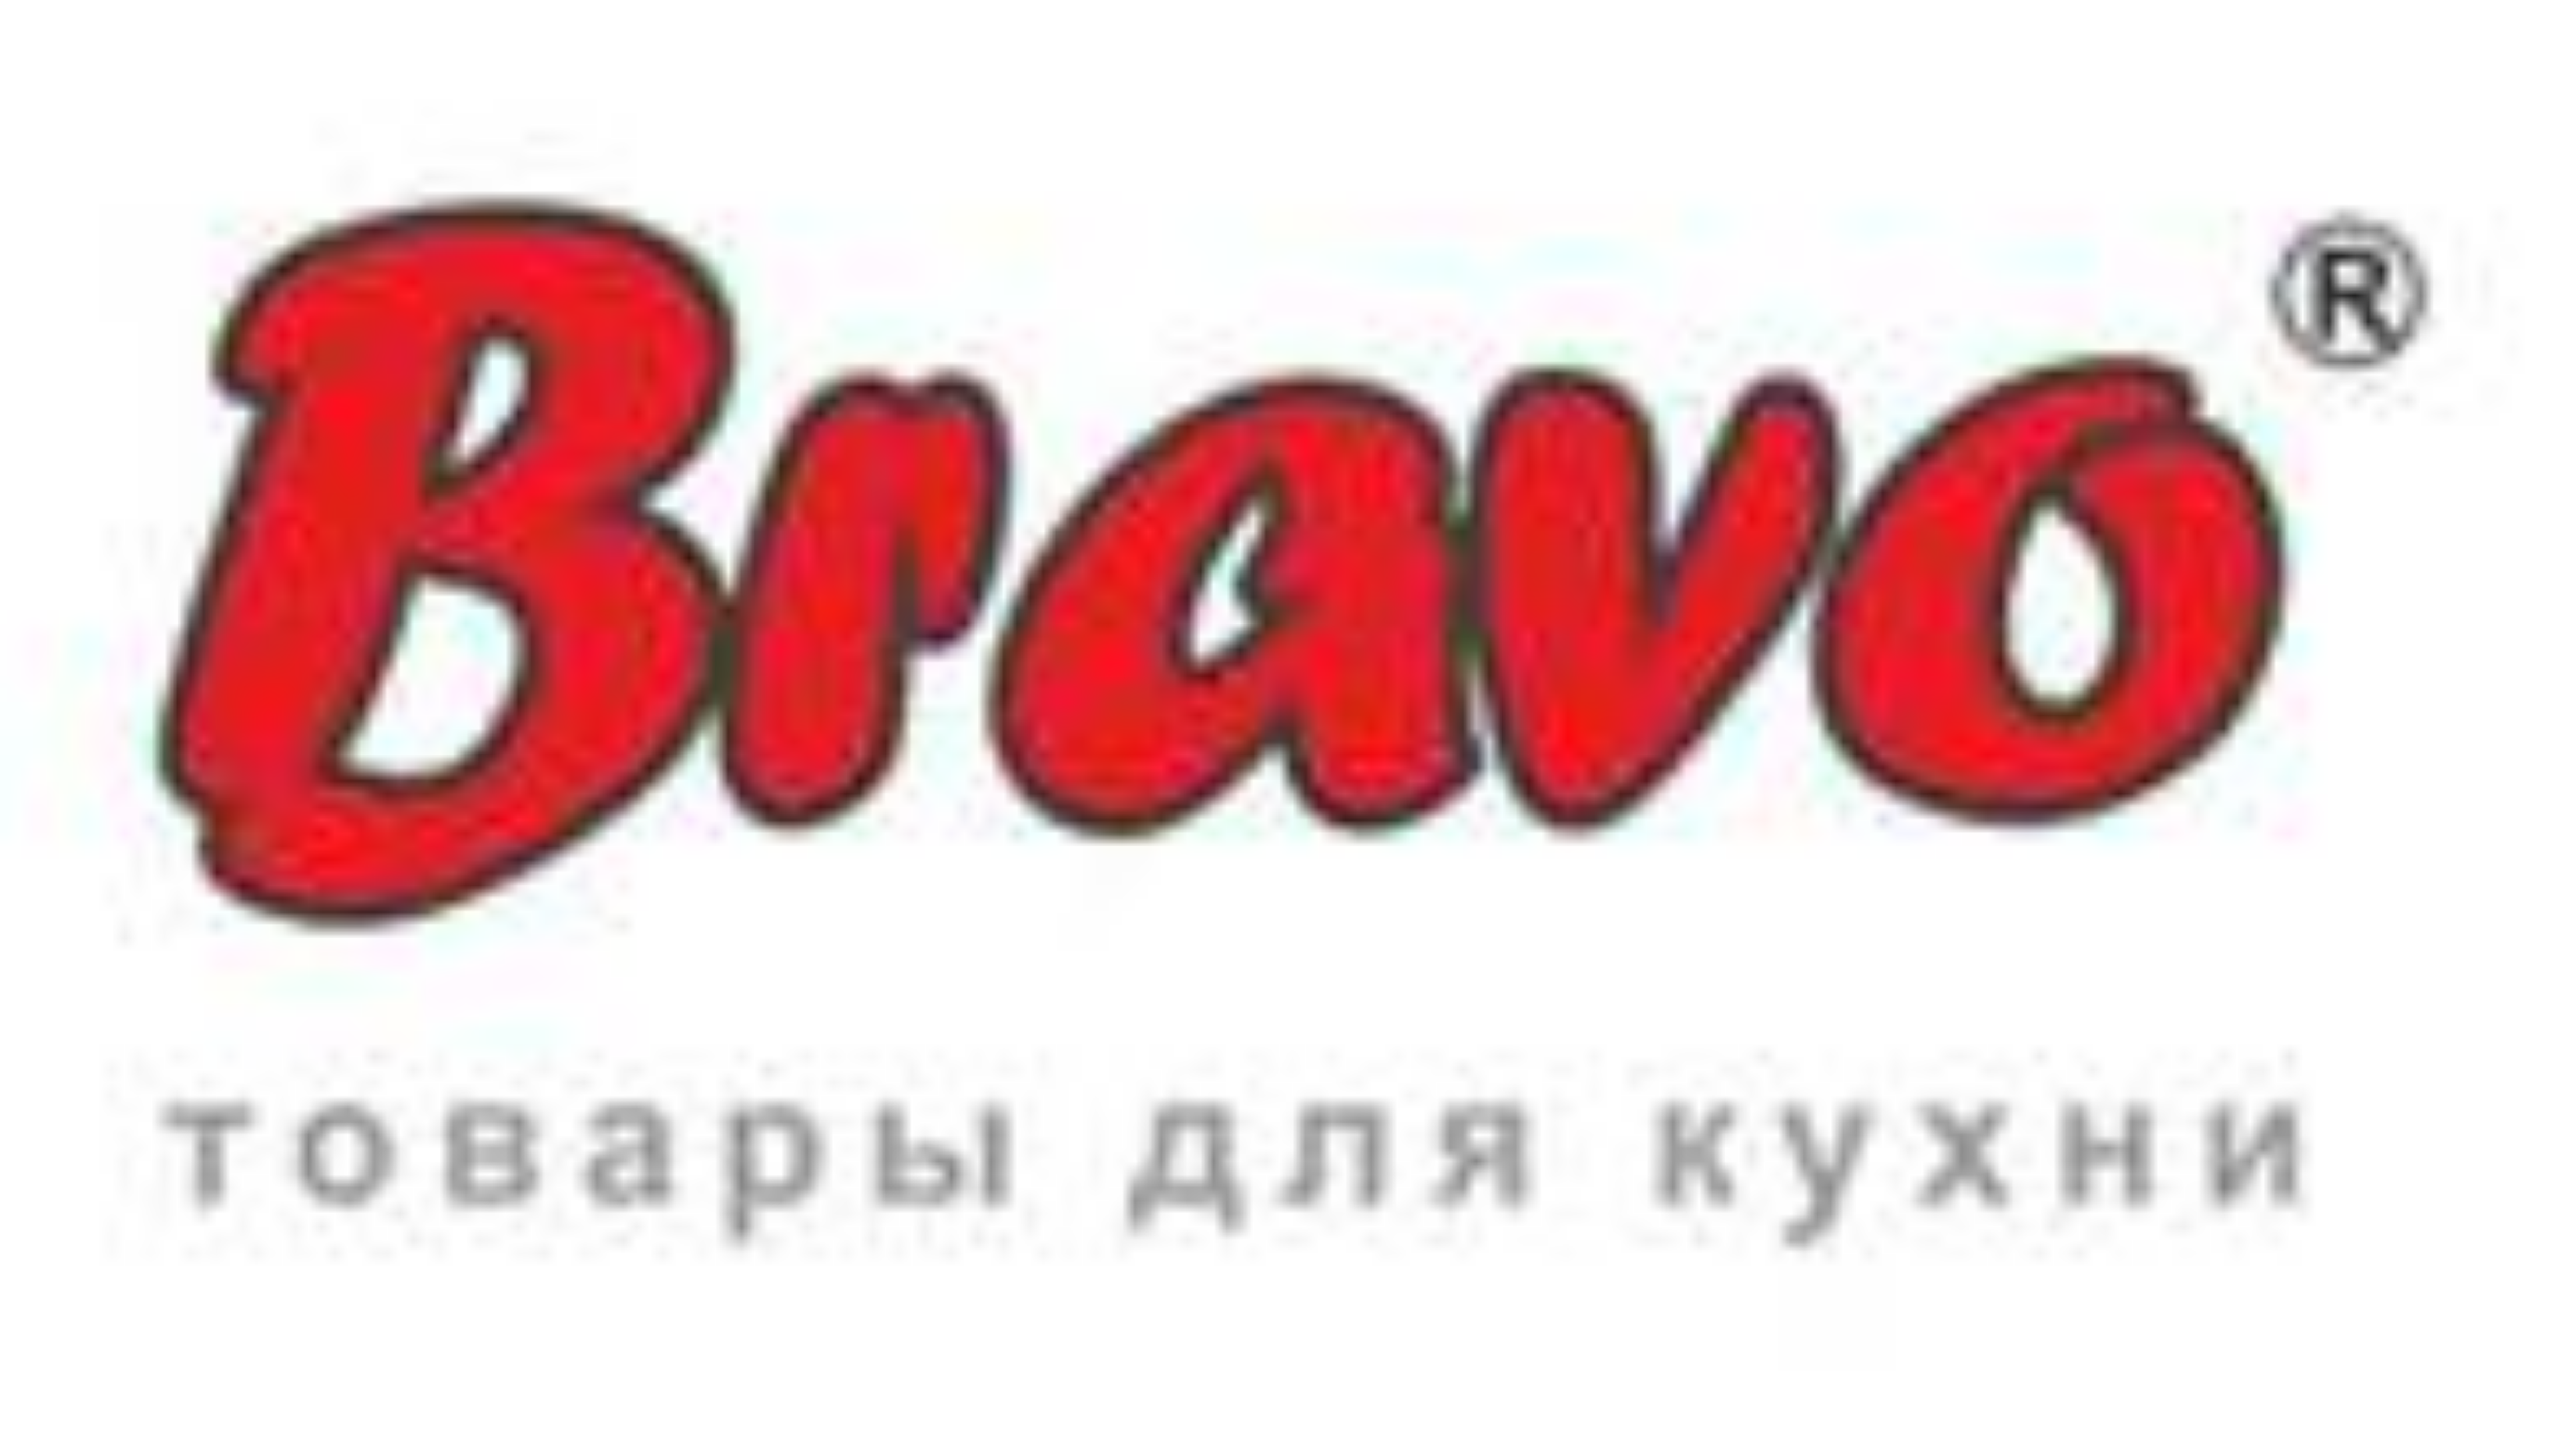 Be bravo. Браво. Логотип товары для кухни. Bravo логотип. Браво надпись.